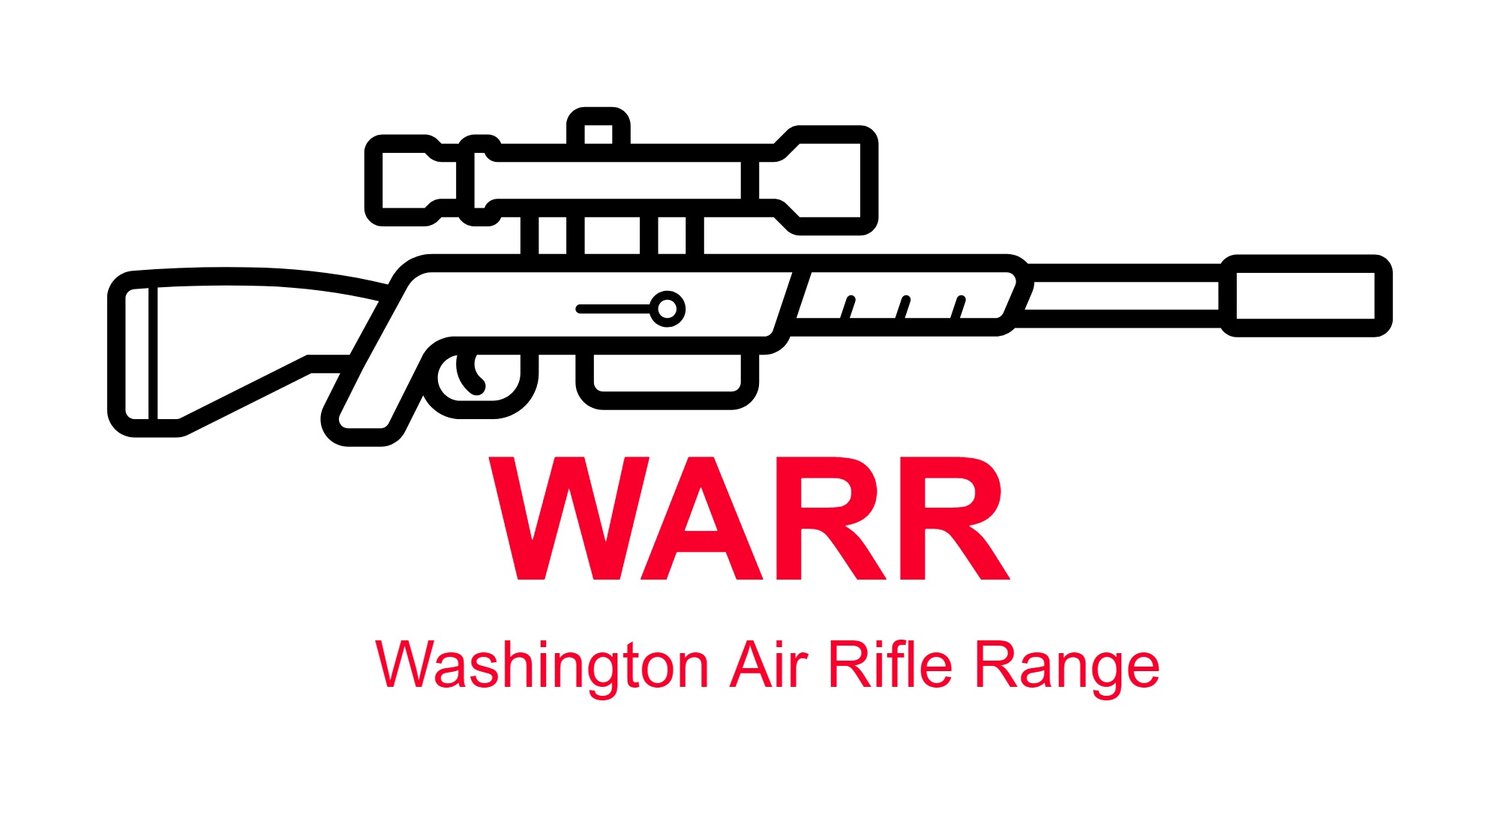 Washington Air Rifle Range